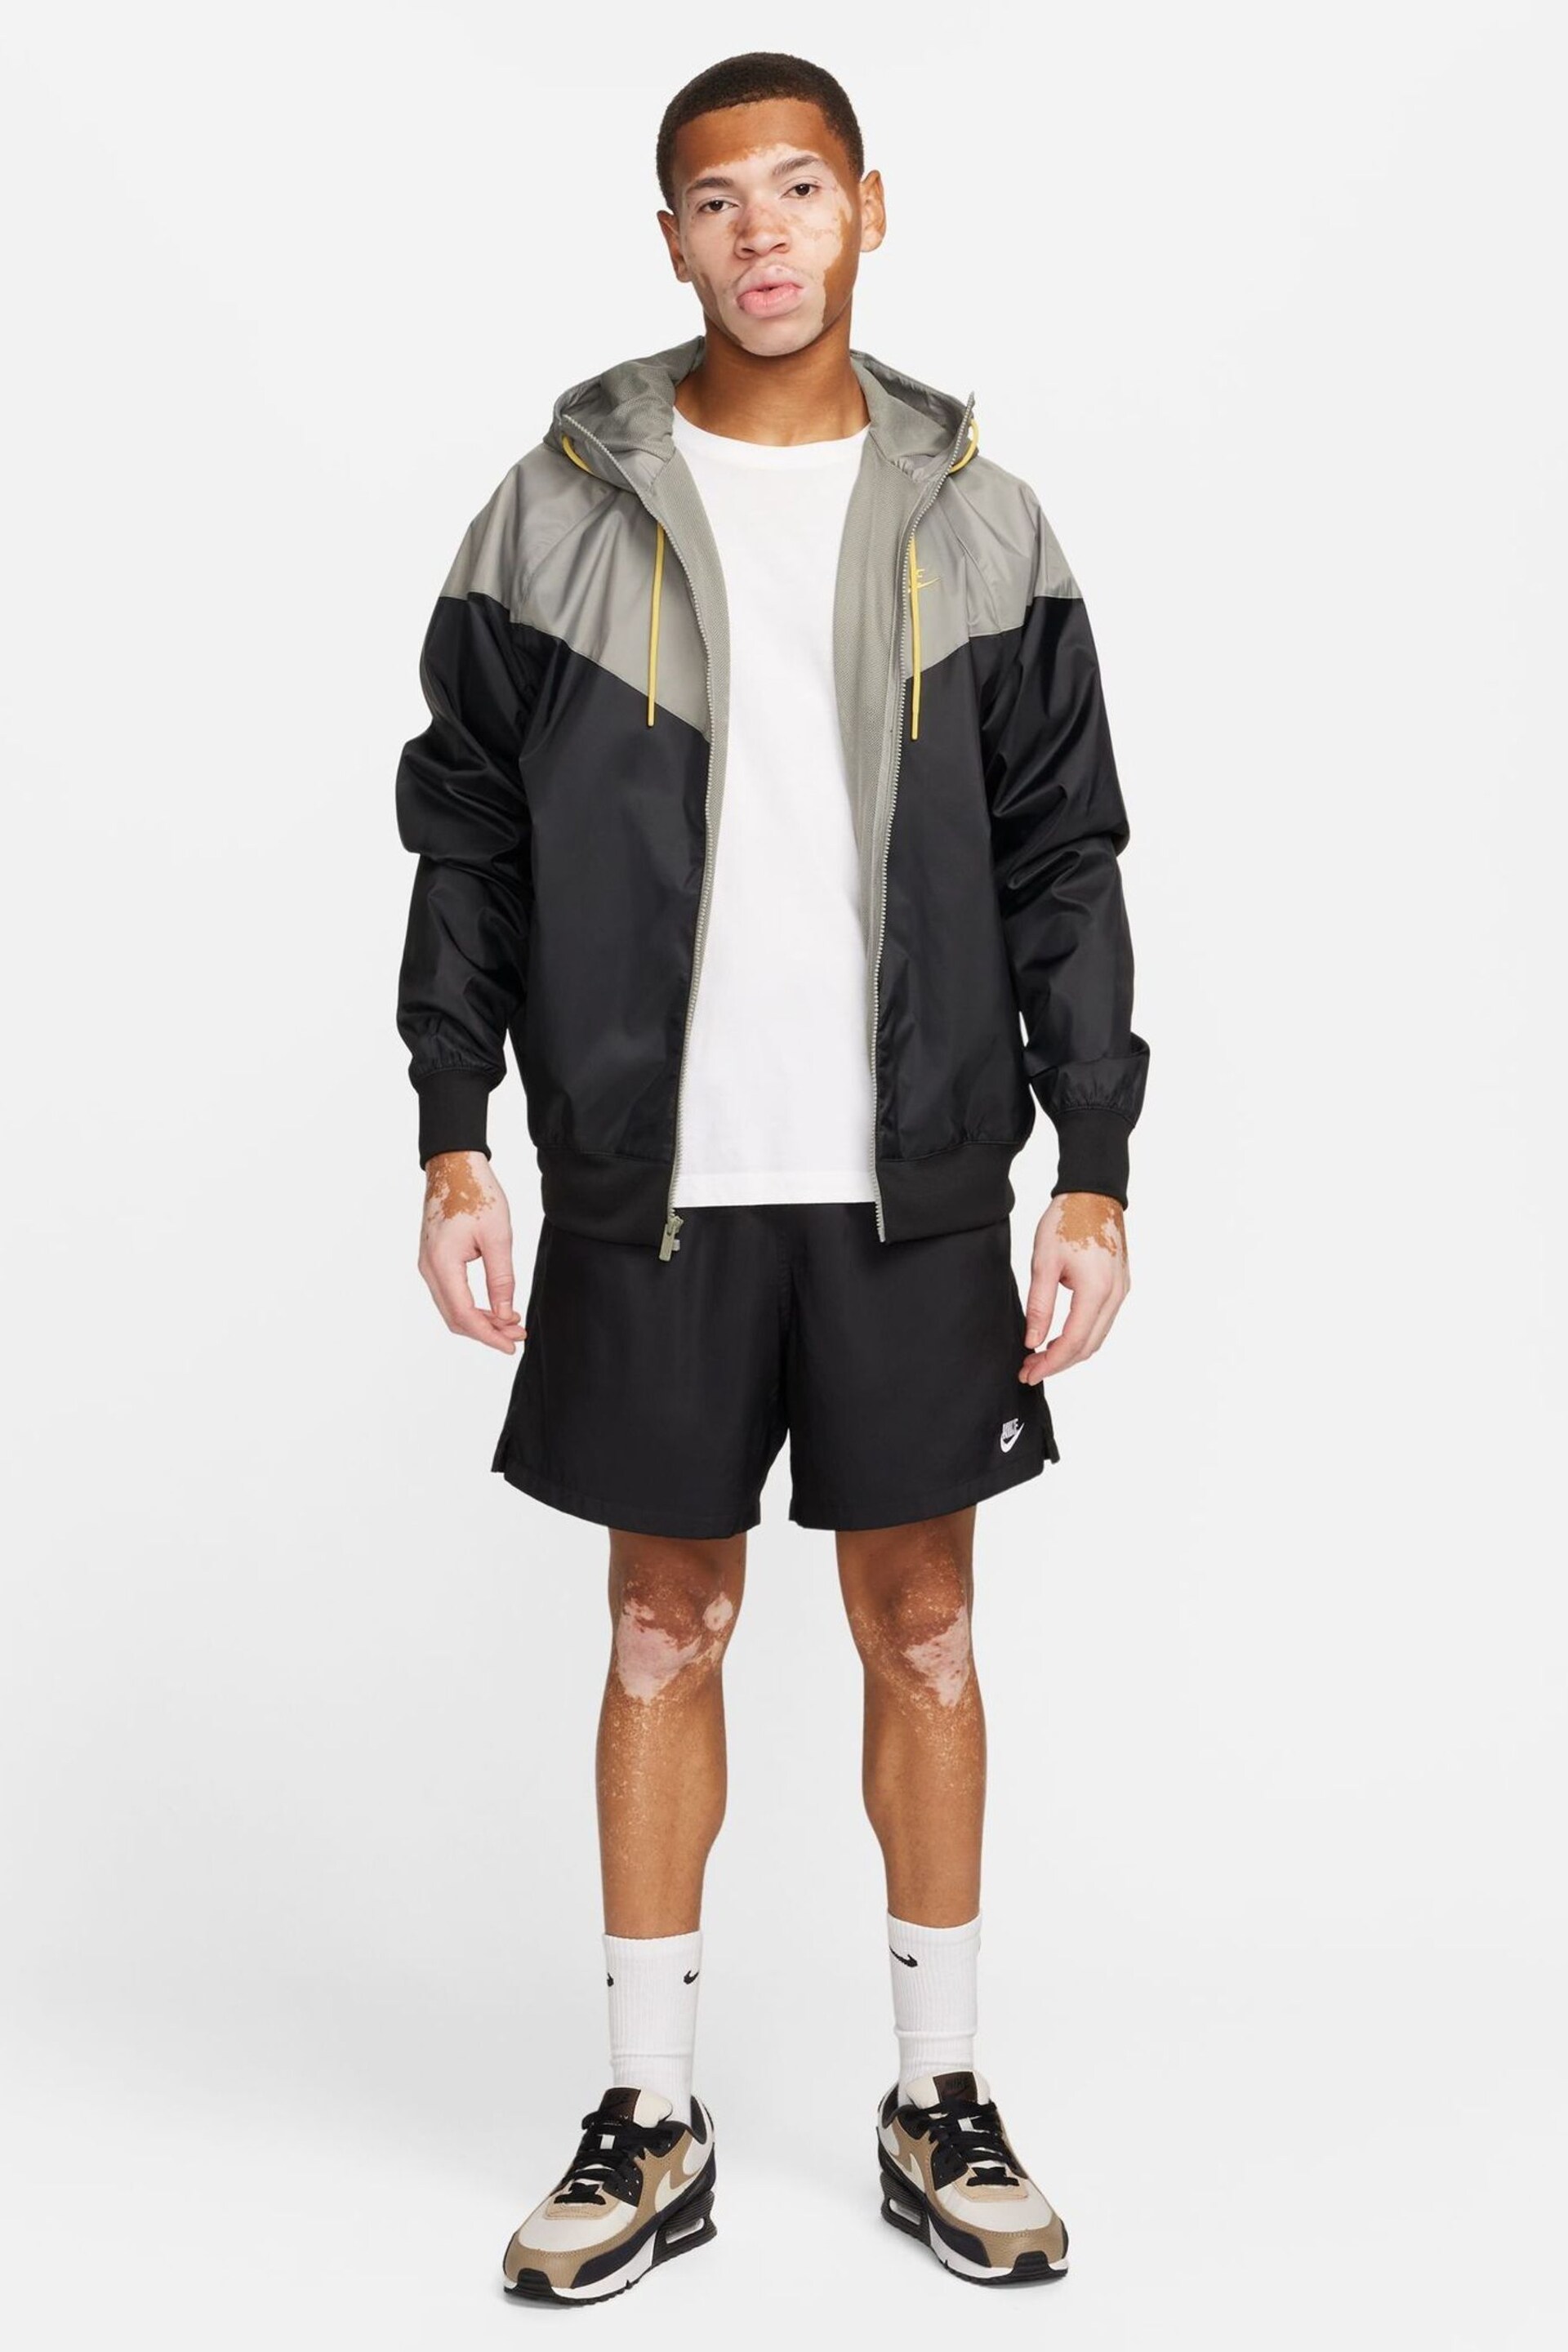 Nike Black/Grey Sportswear Windrunner Hooded Jacket - Image 7 of 14